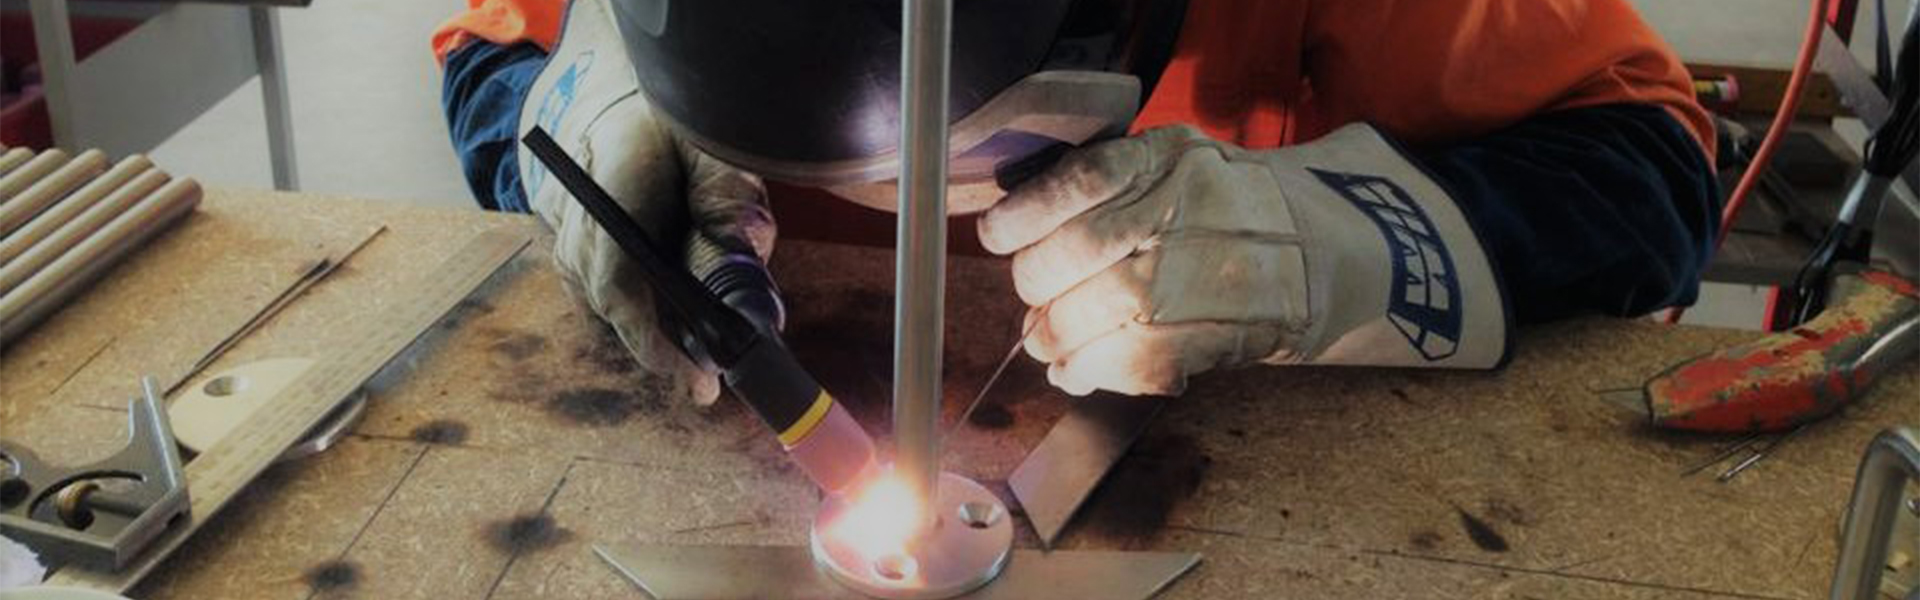 welding & welding repair mig, tig & arc or mma south australia local welding